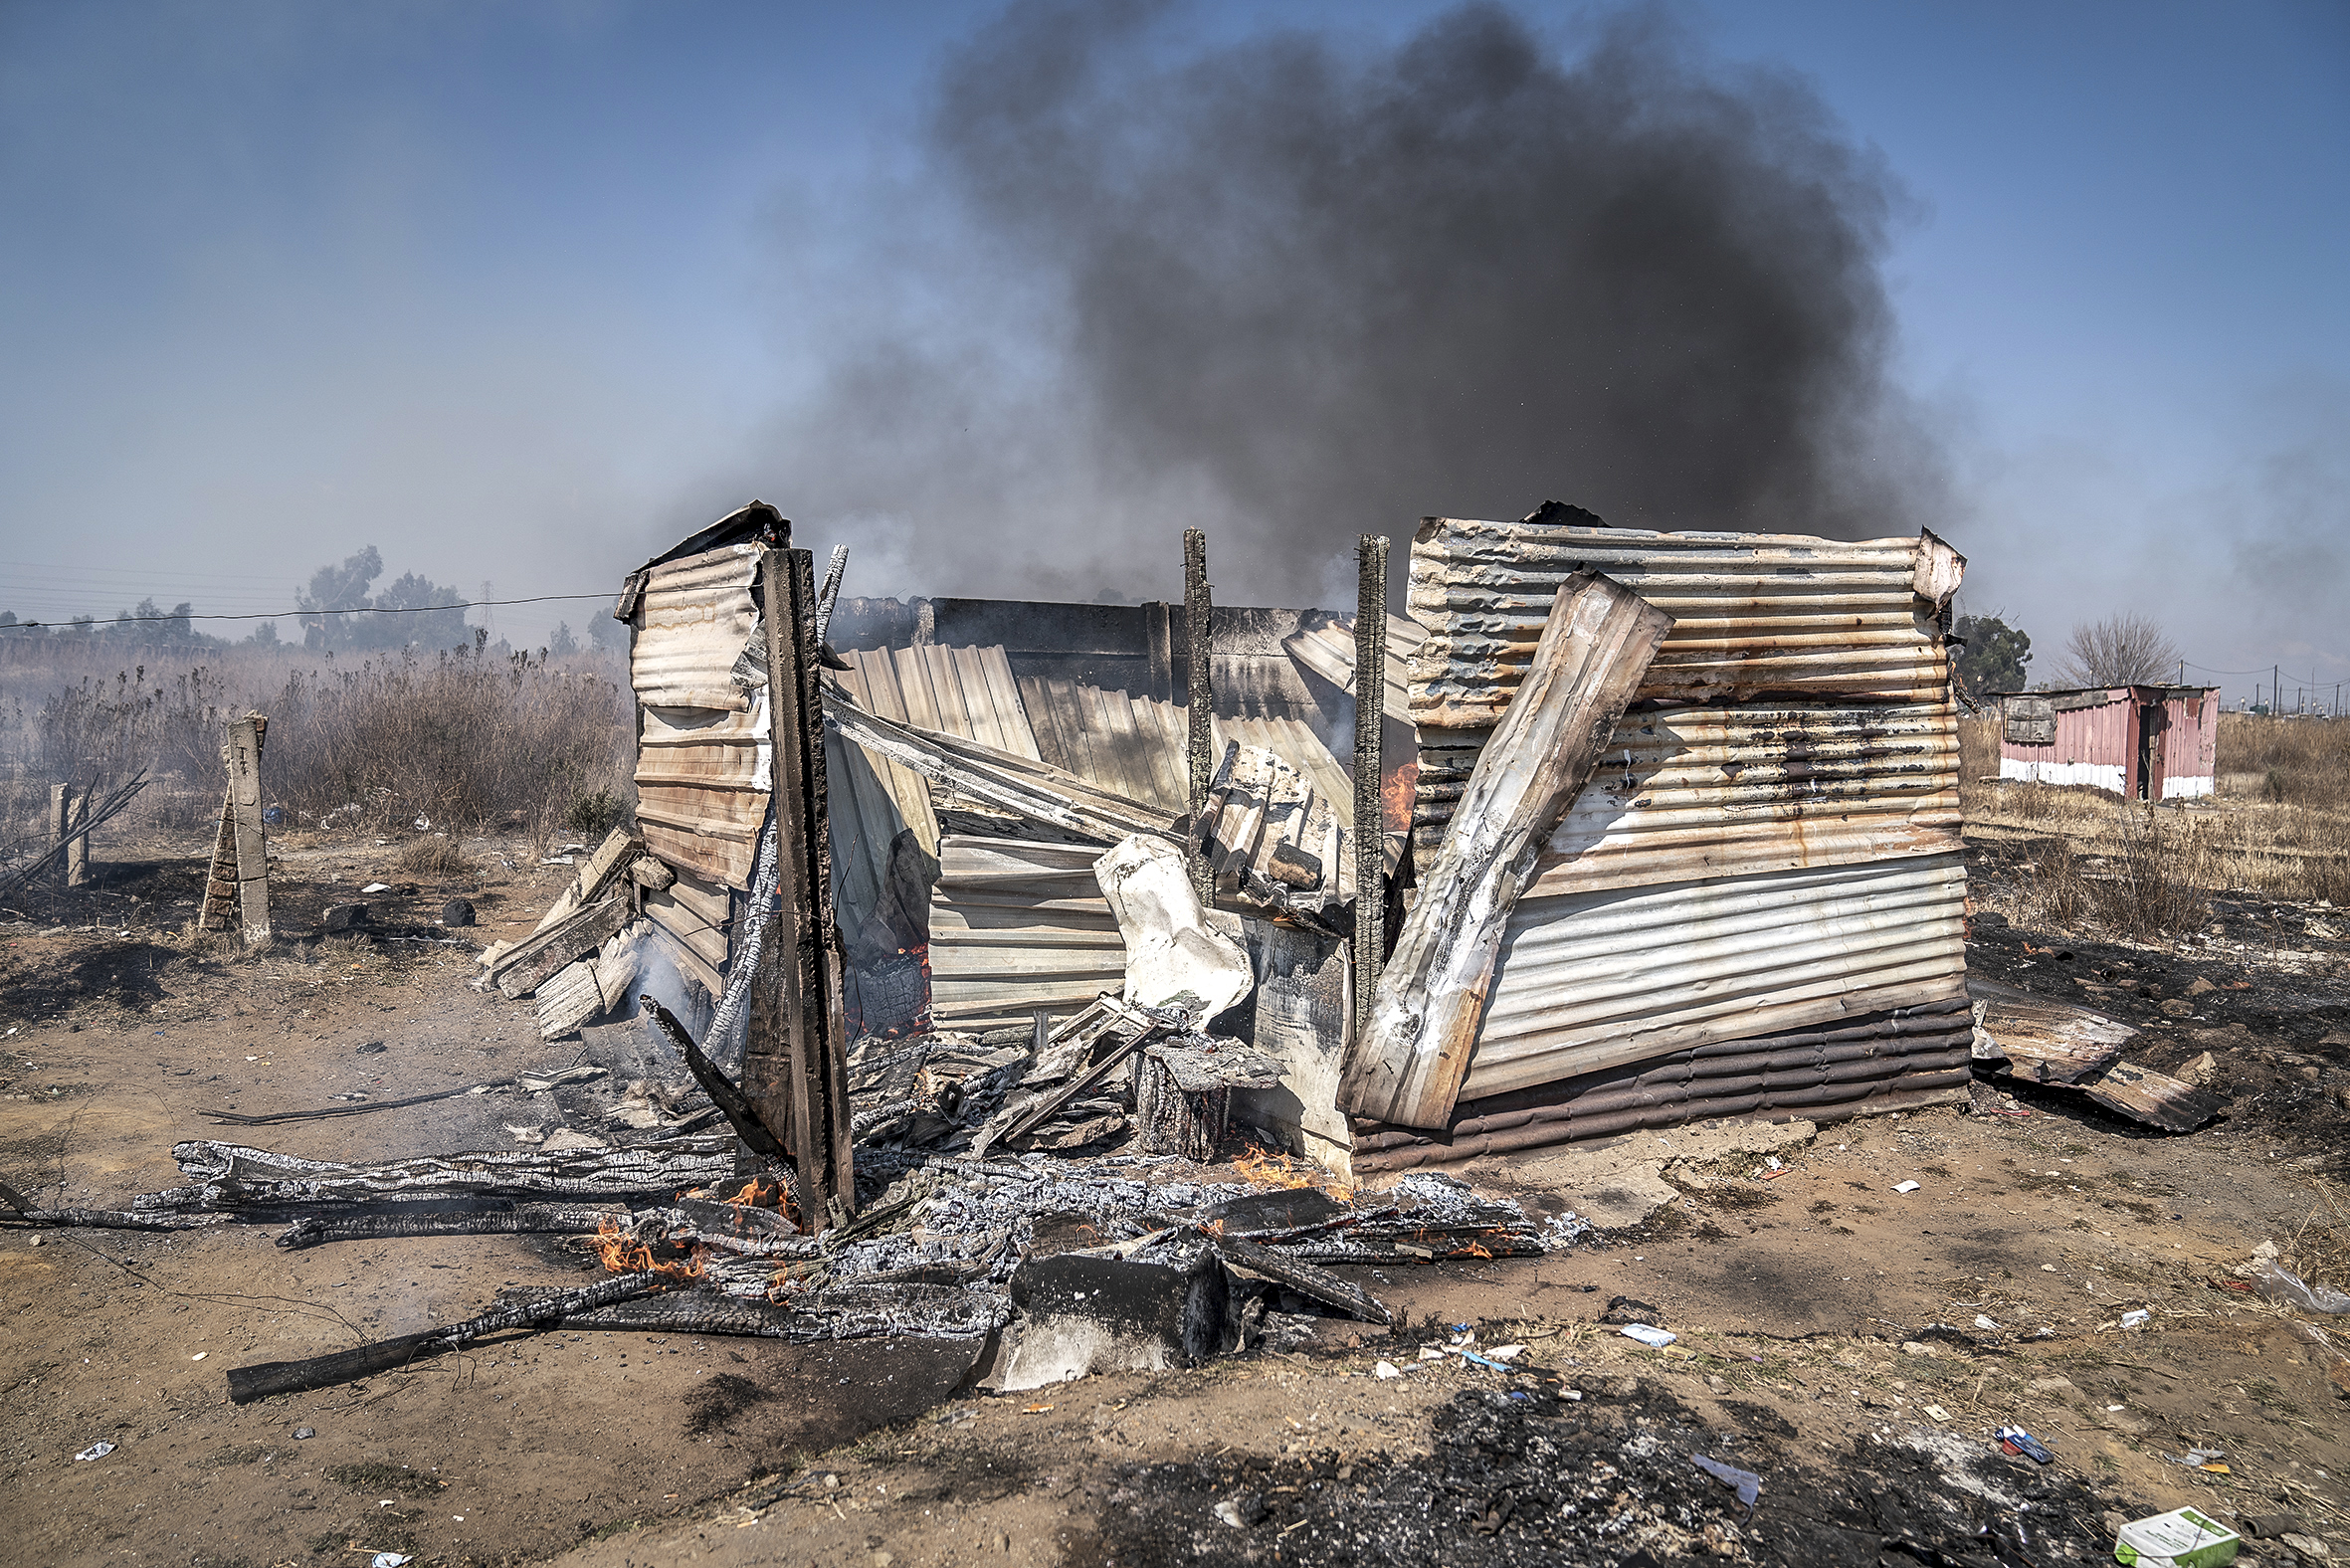 The smoldering remains of an alleged zama zama dwelling.